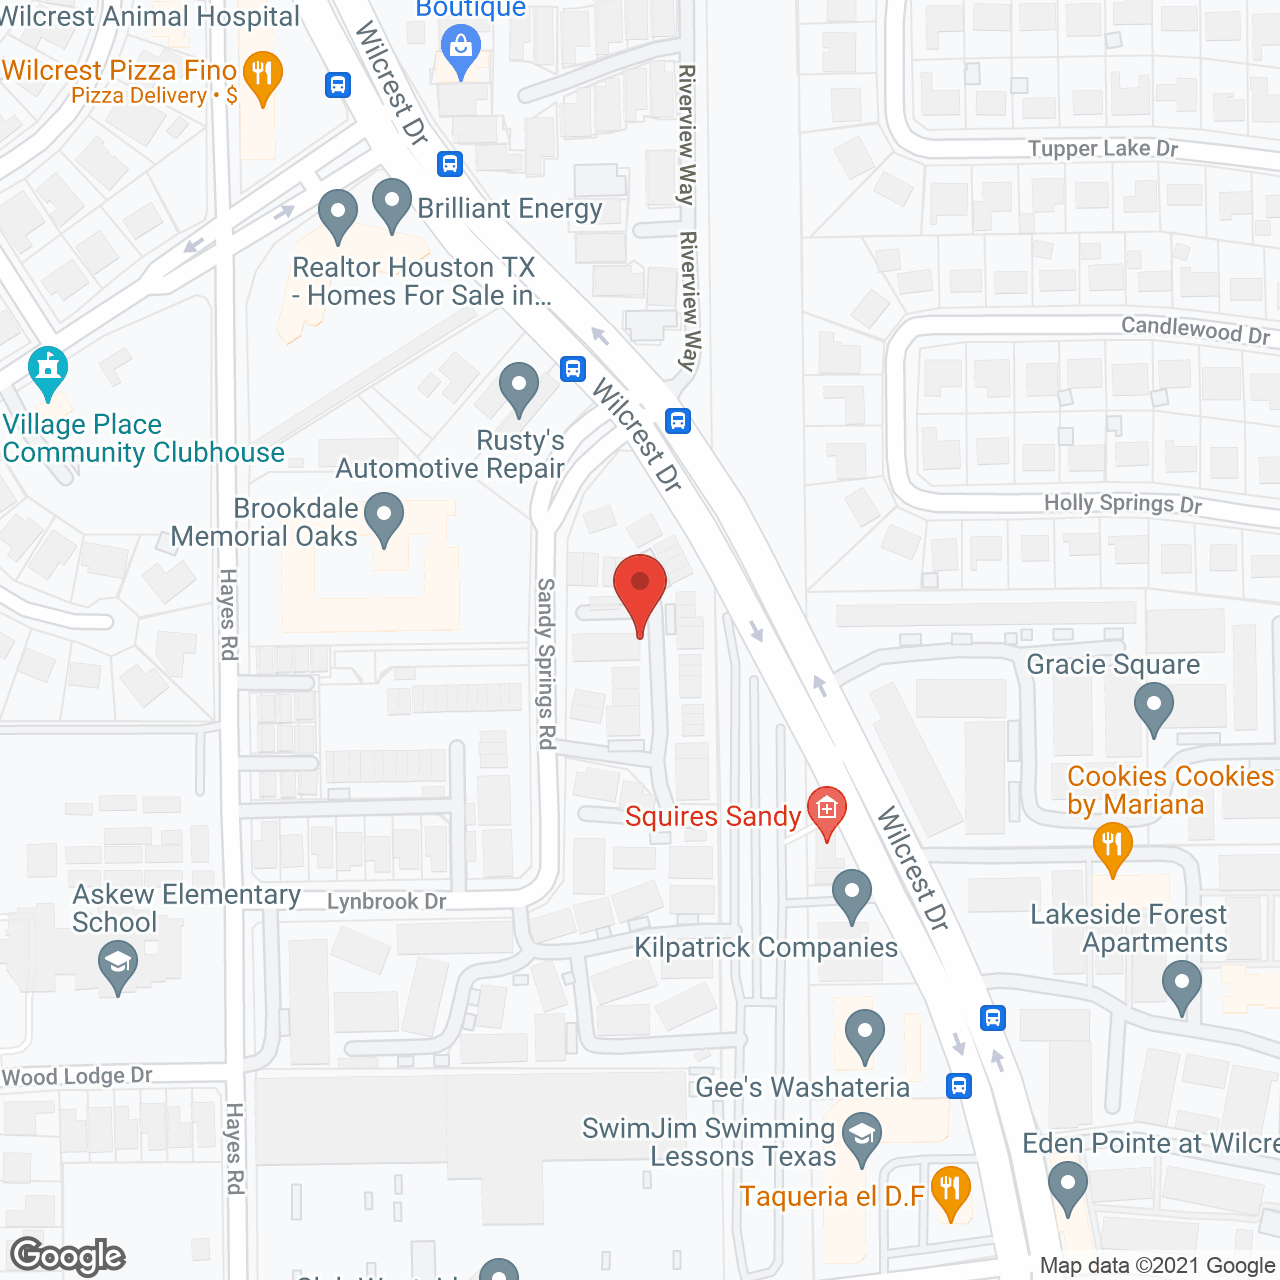 Brookdale Memorial Oaks in google map